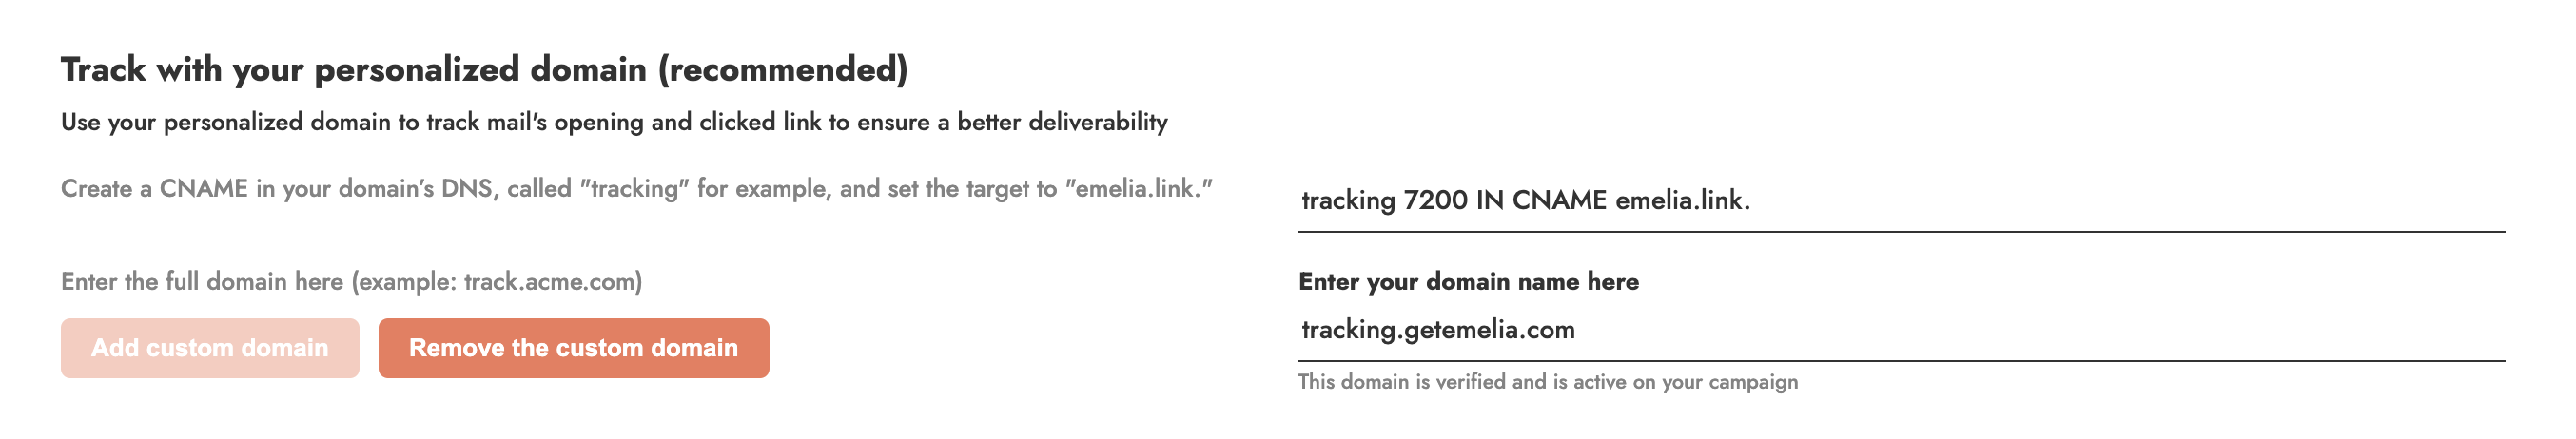 Tracking domain